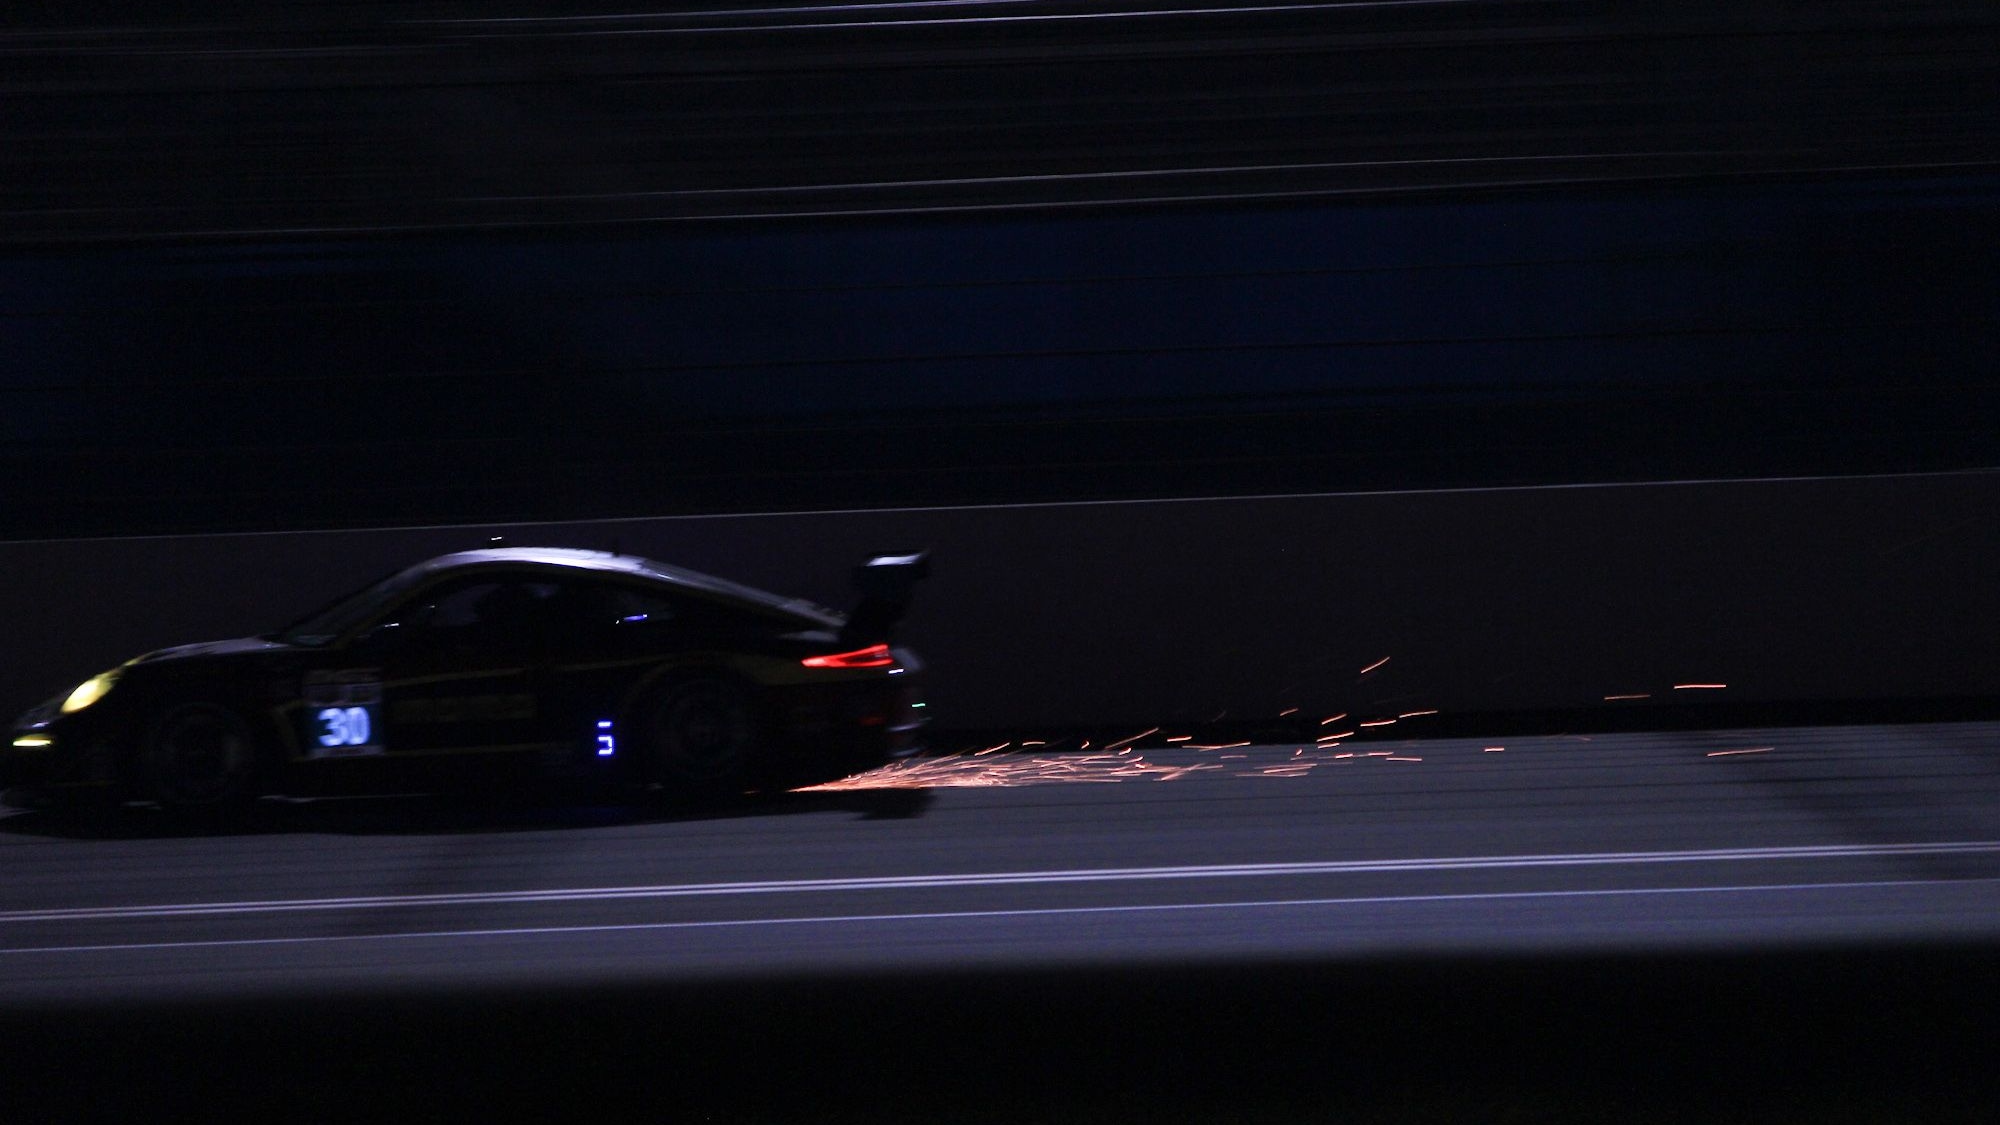 The 2014 Rolex 24 at Daytona at night